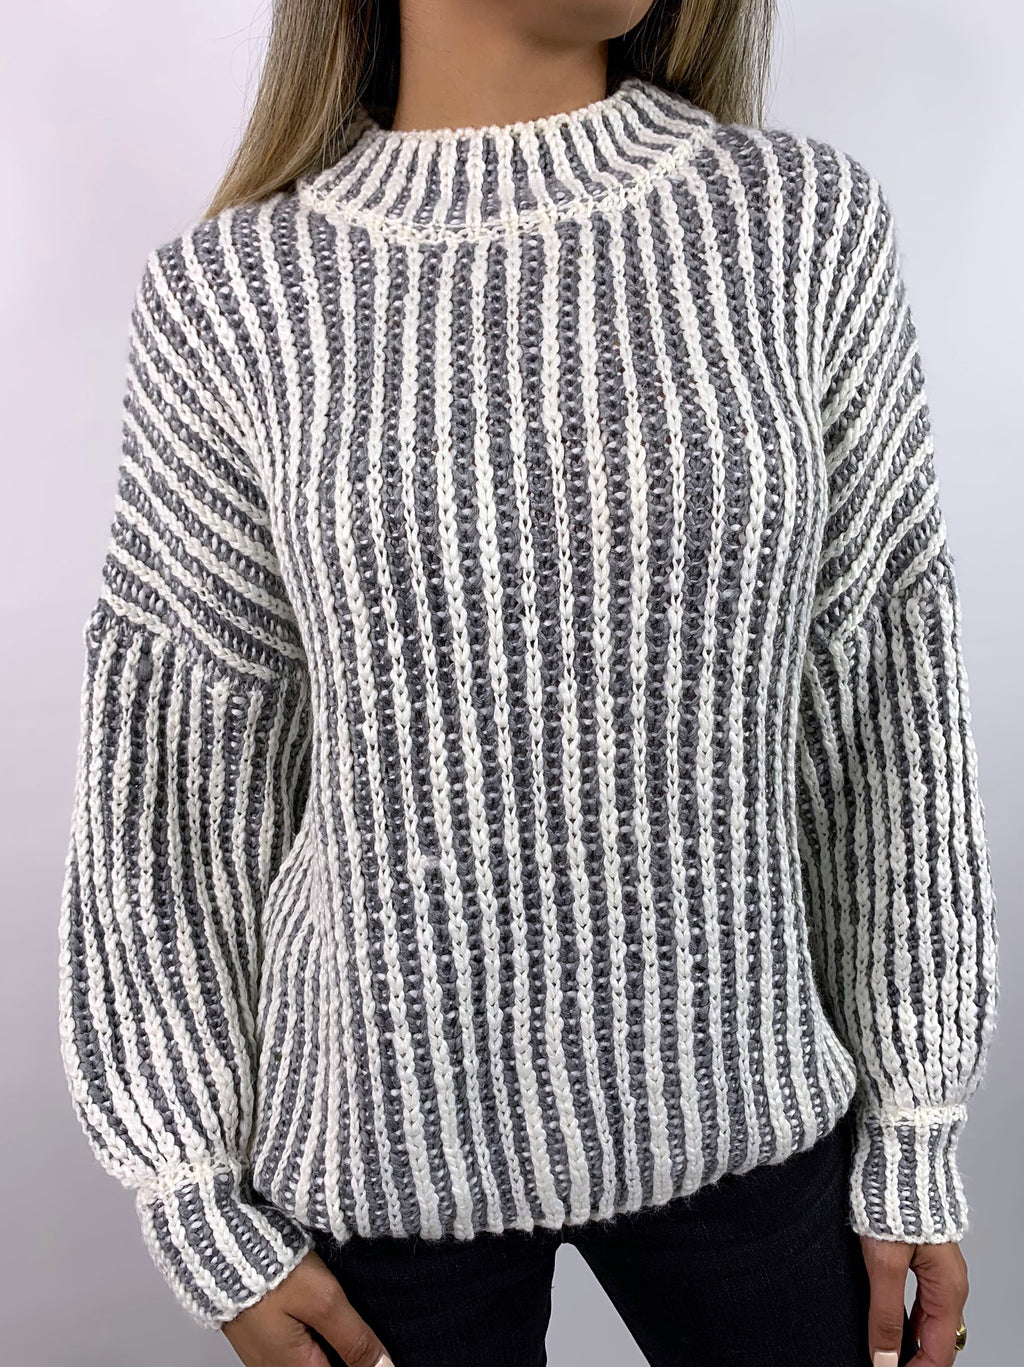 Icy Knit Handmade Sweater - marfemme